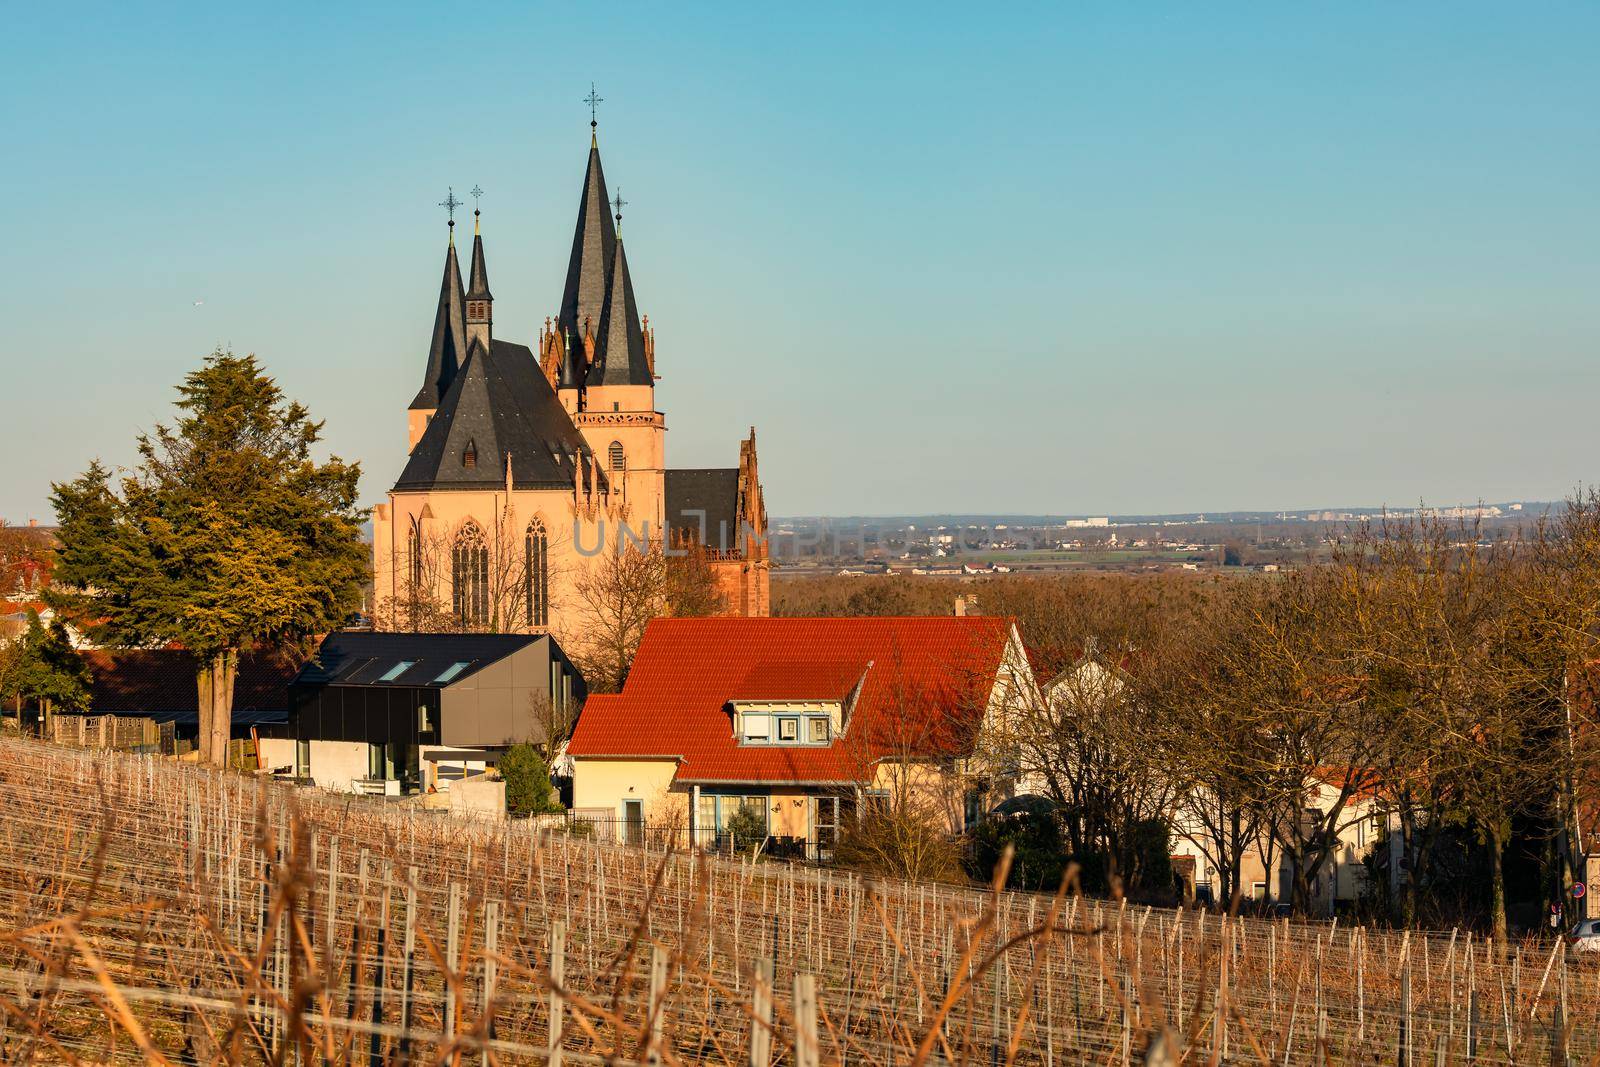 The Katharinenkirche in scenic Oppenheim is located above the Rhine on the Rheinterassenweg, Germany